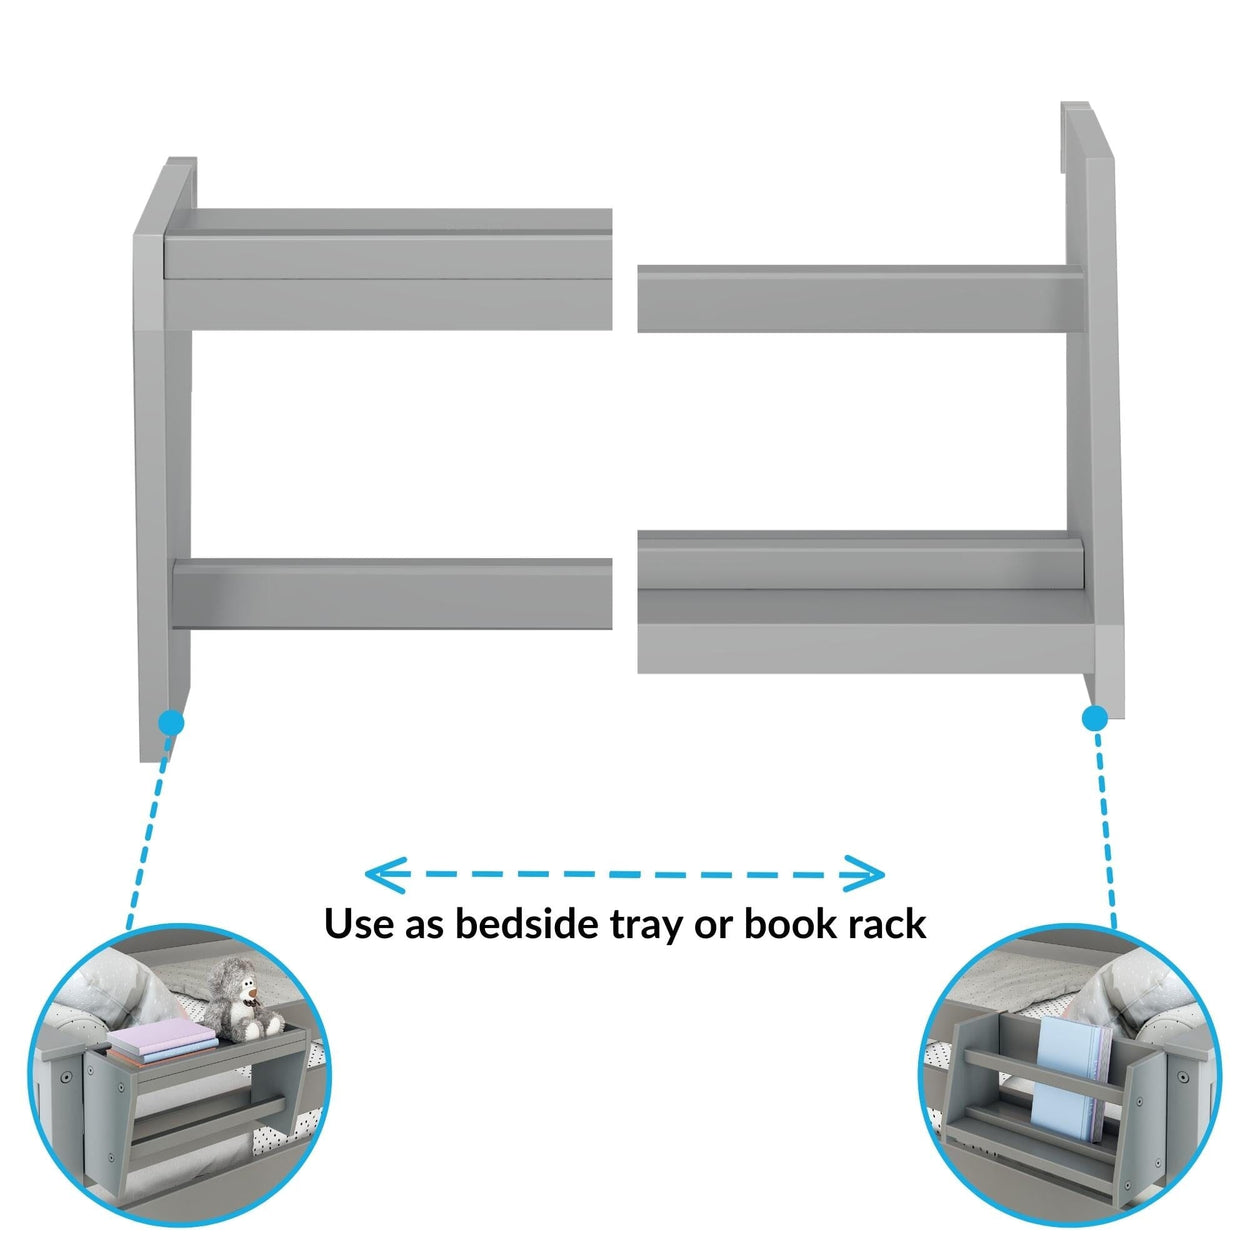 180099-121 : Furniture Bedside Tray, Grey